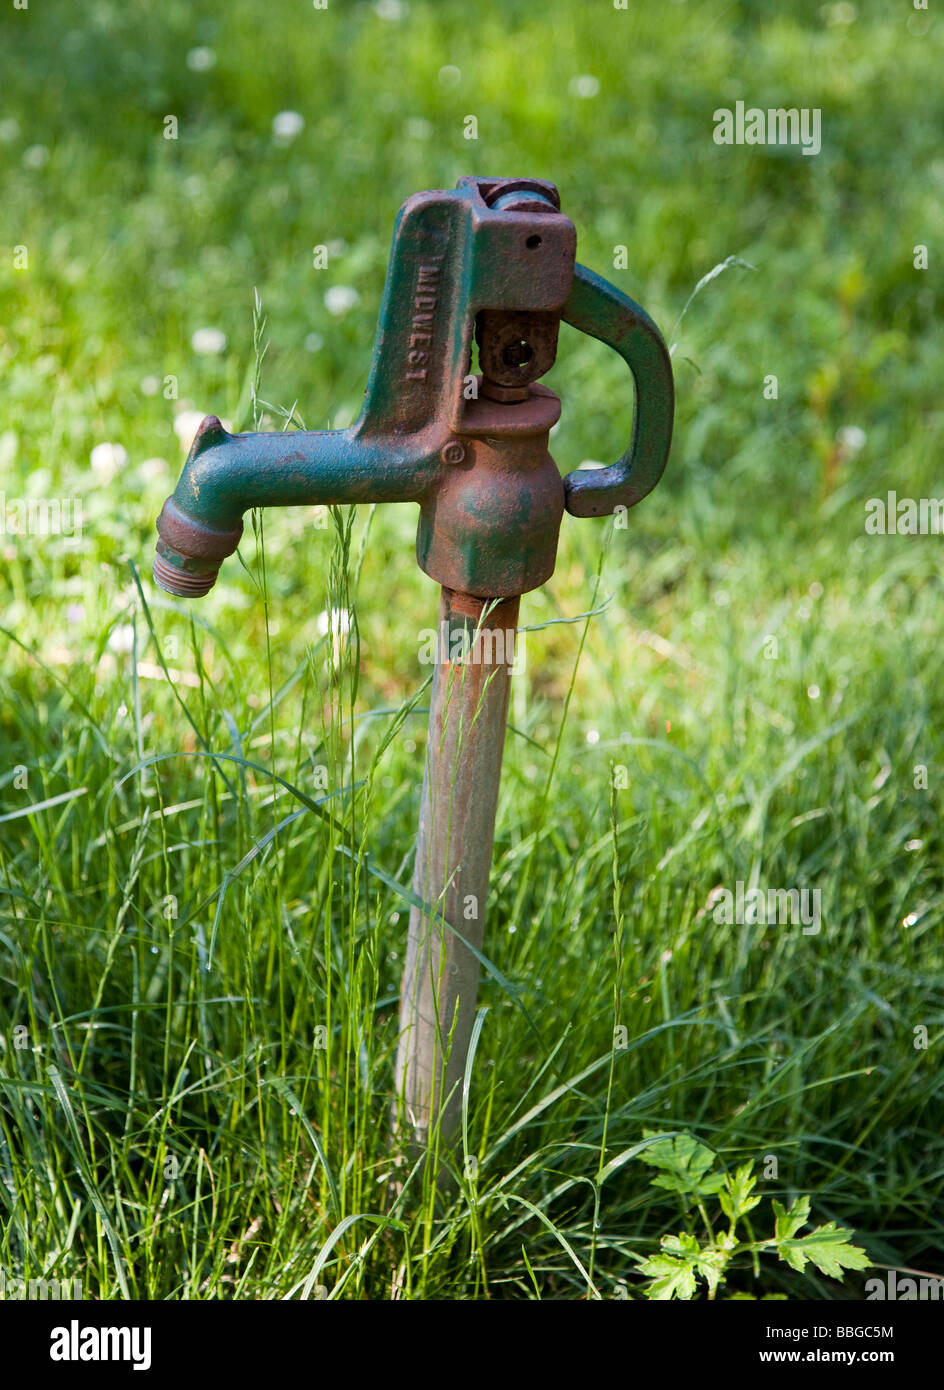 Water spigot in the ground Stock Photo